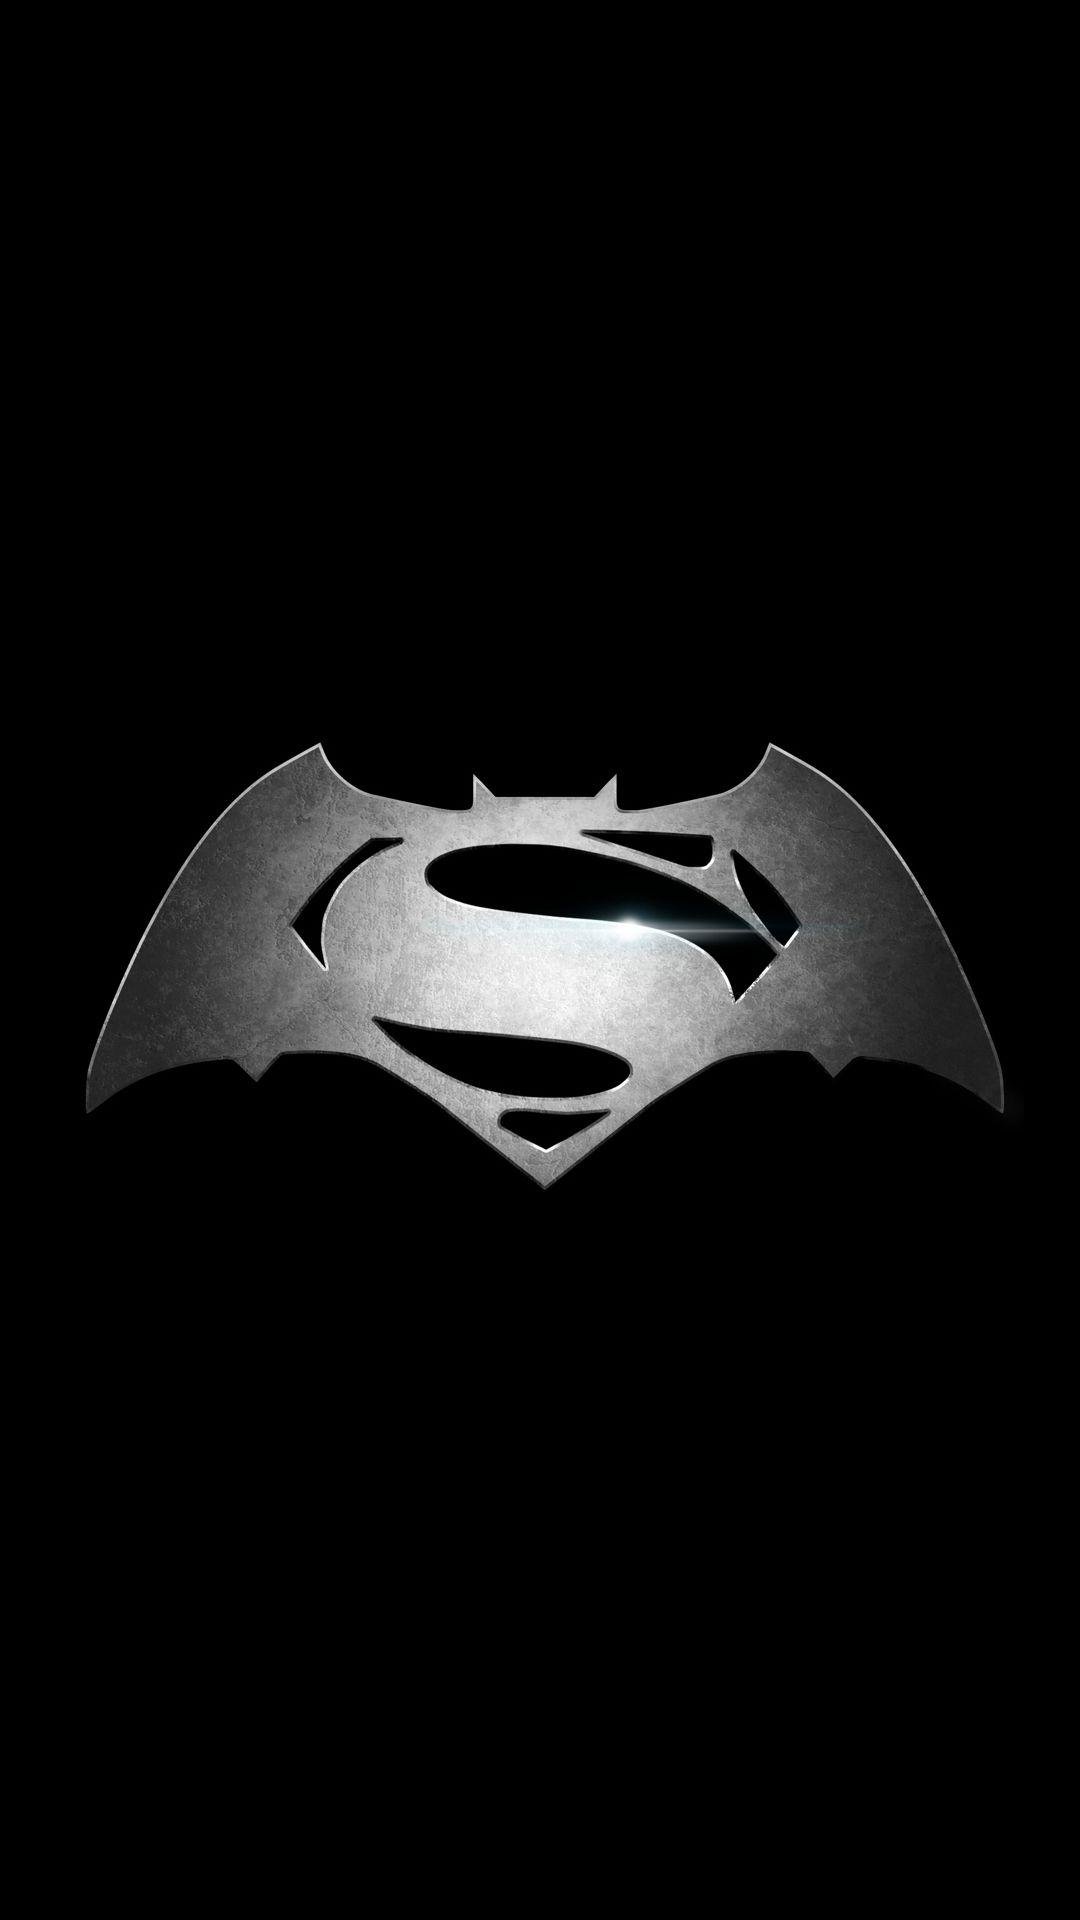 Dark Superman Logo - wallpaper.wiki-Dark-Superman-Logo-Iphone-Background-PIC-WPD003536 ...